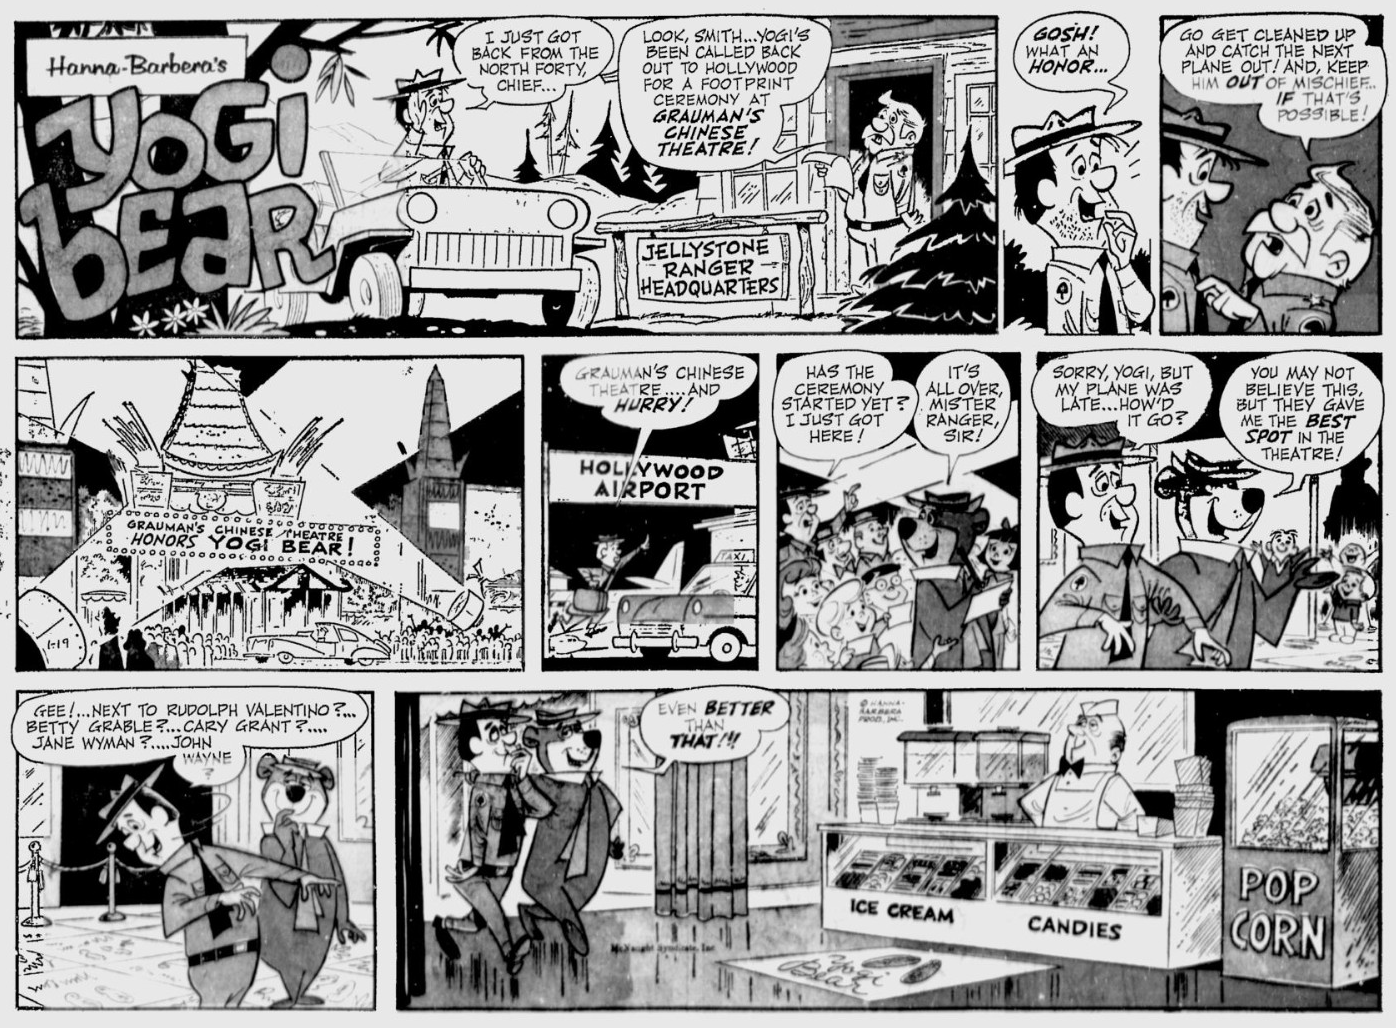 Yowp: Yogi Bear Weekend Comics, January 1964